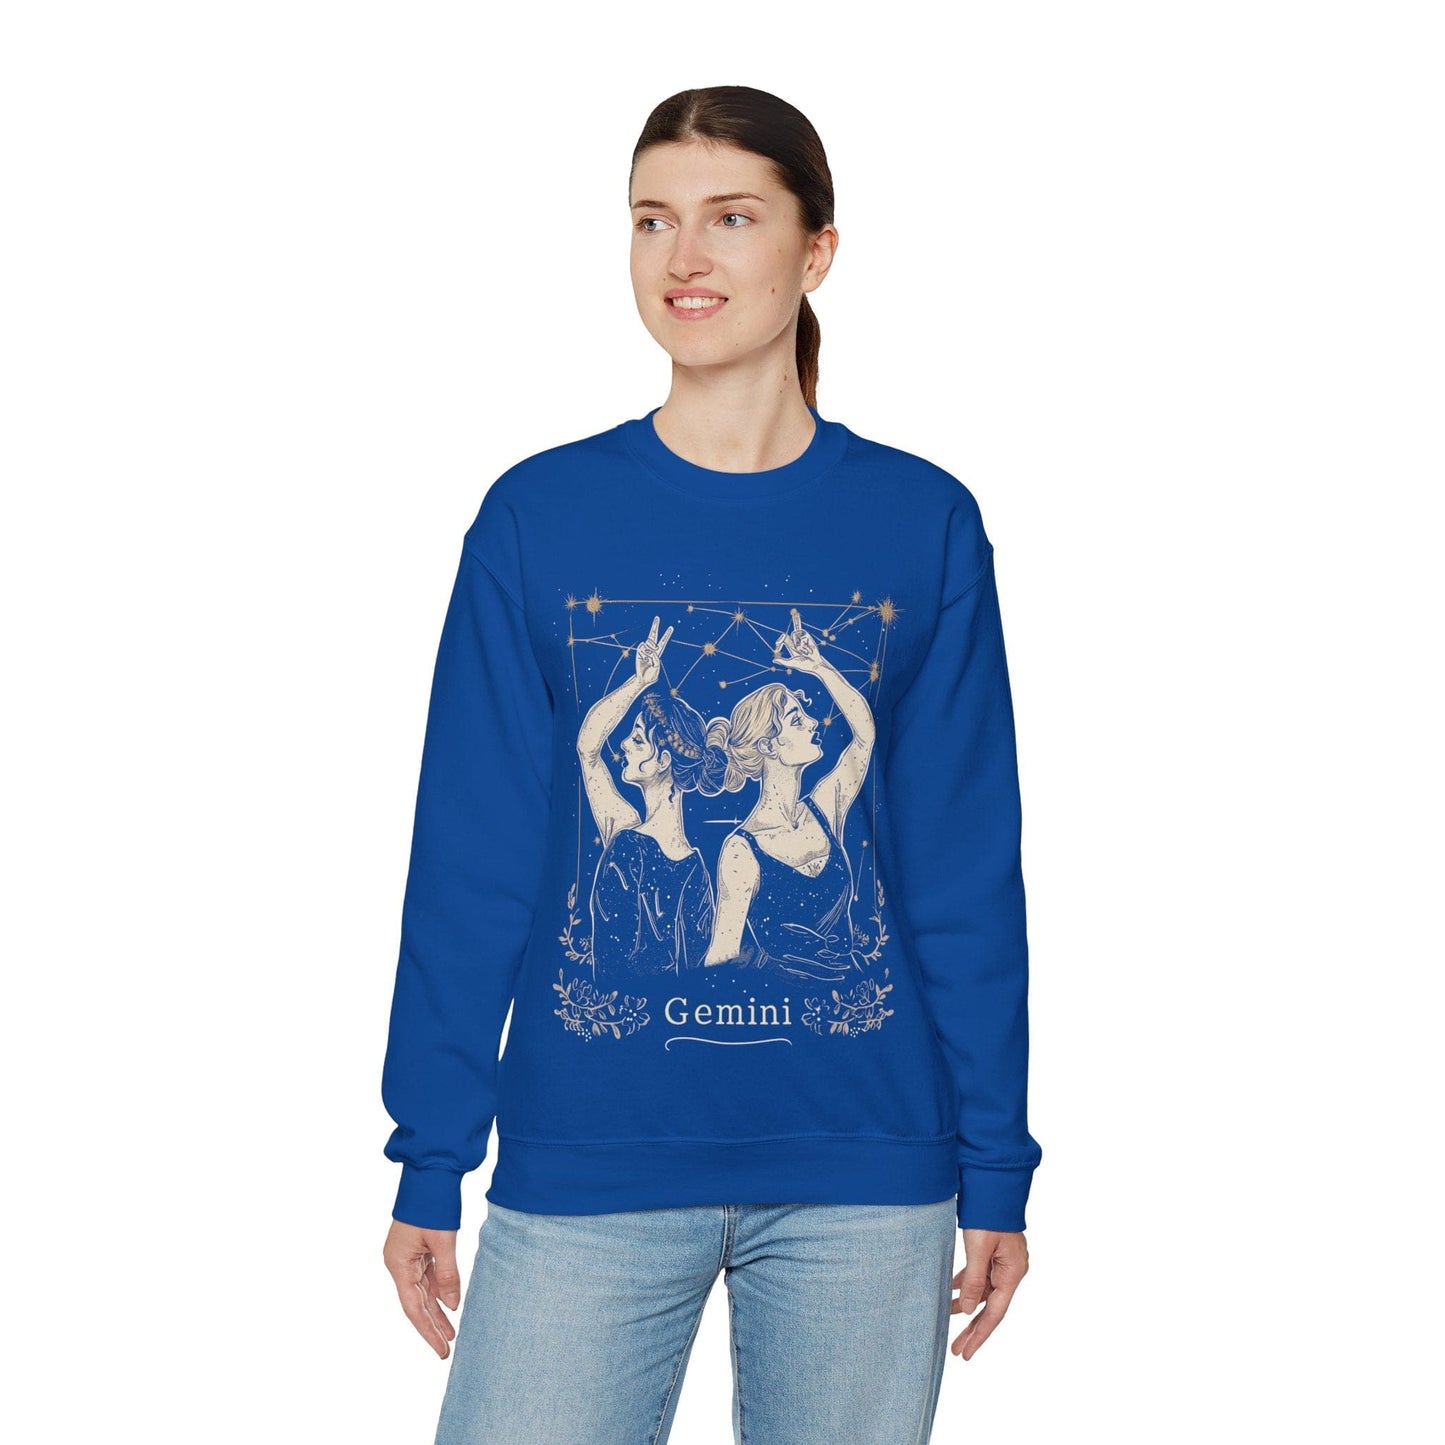 Sweatshirt Gemini Air Whisper Soft Sweater: Dual Shine for the Twin Sign